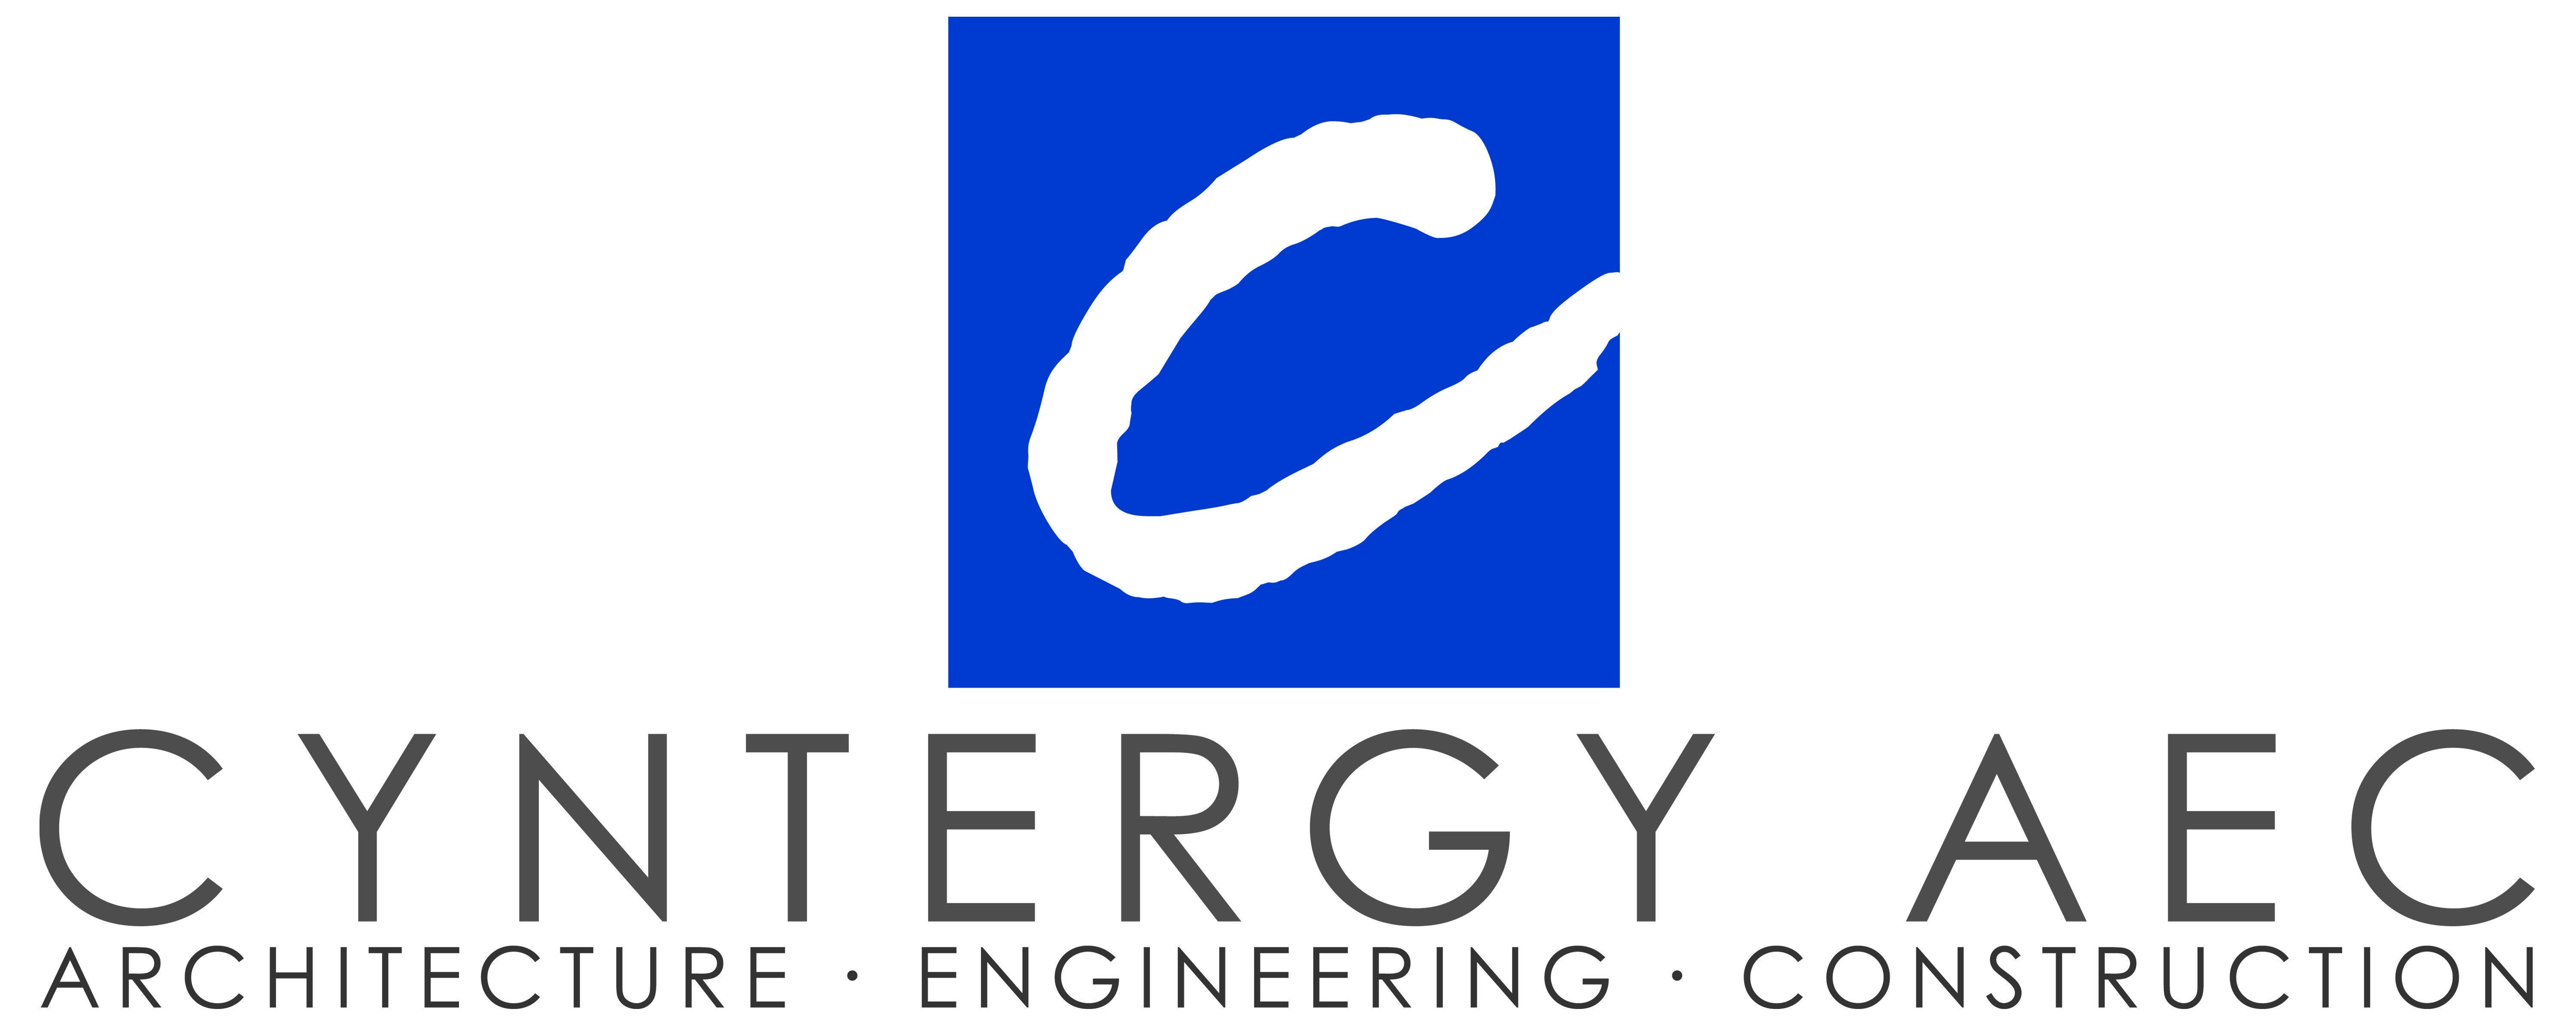 AEC Logo - cyntergy aec Logo - Epilepsy Foundation of Missouri and Kansas